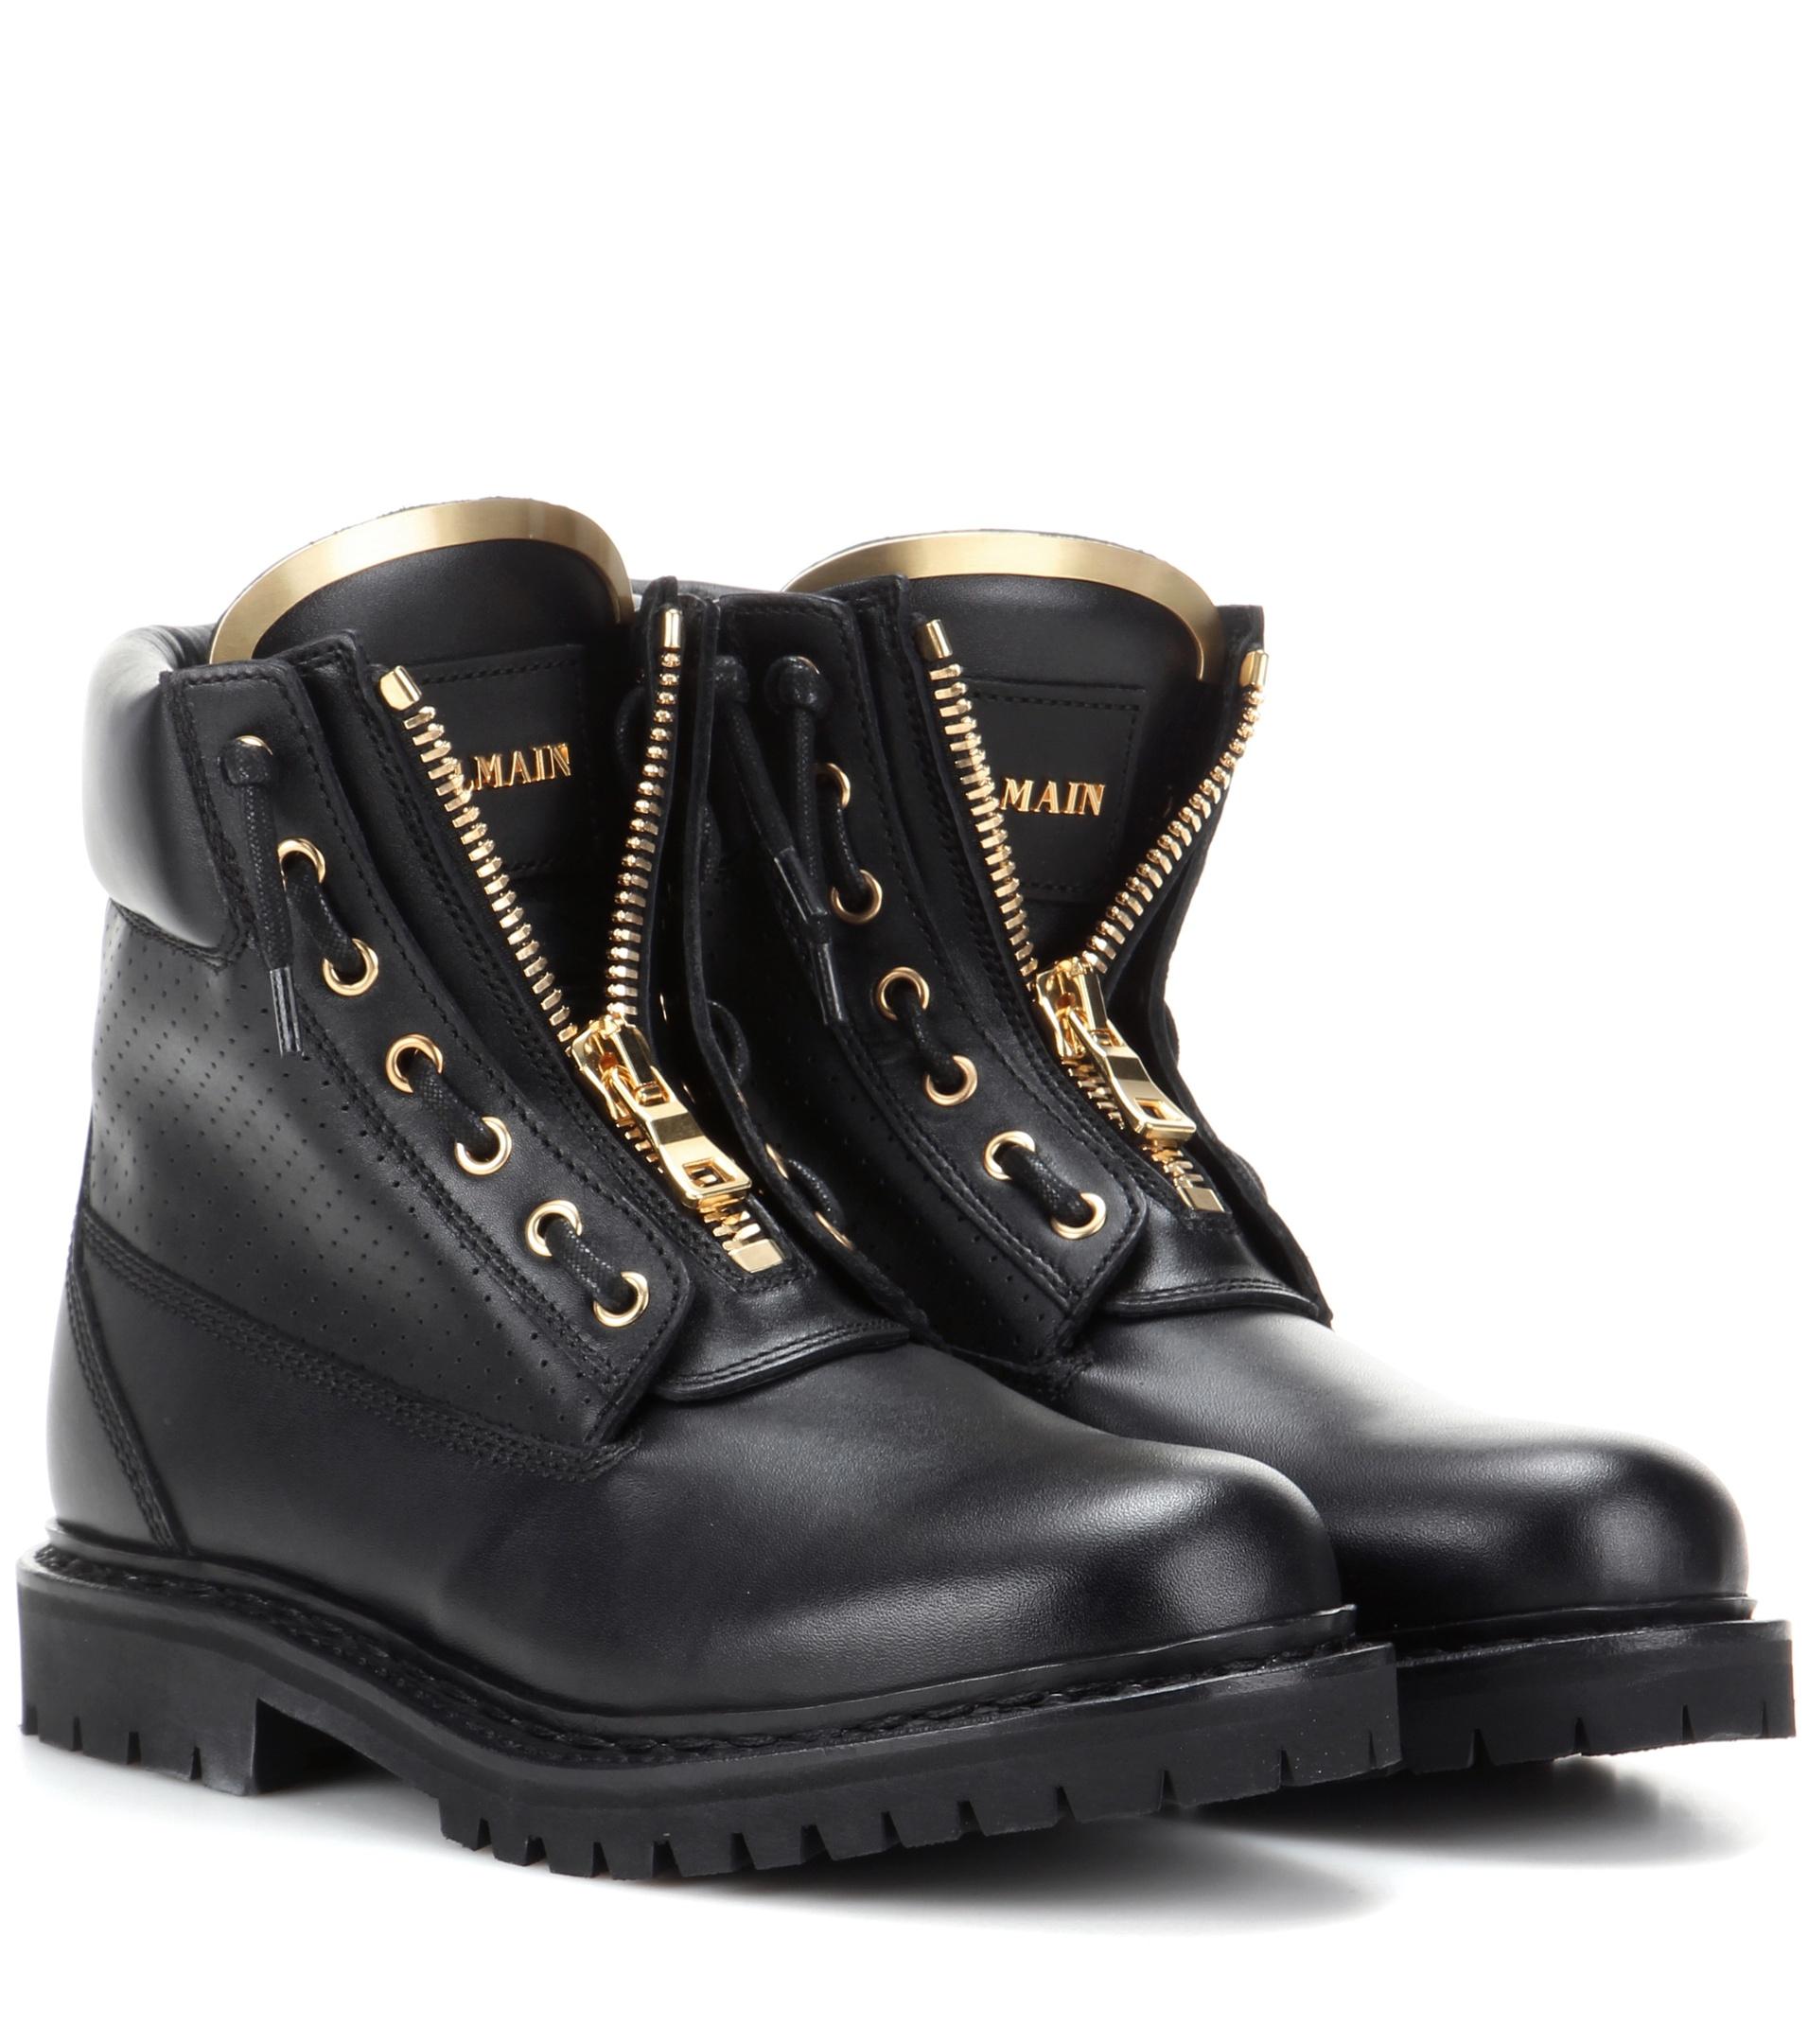 Balmain Taiga Leather Boots in Black - Lyst